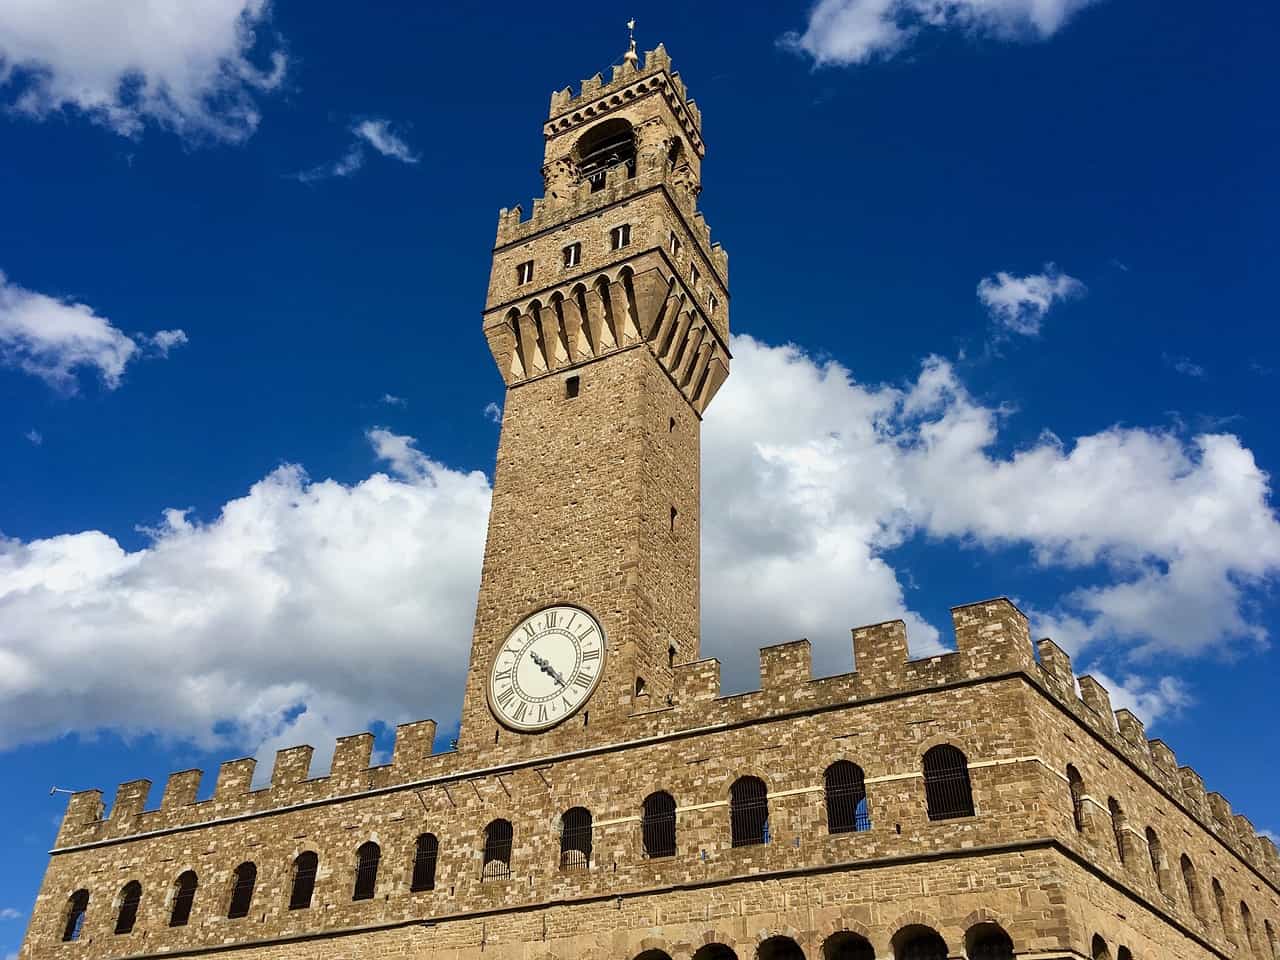 The Tower at Palazzo Vecchio. Image source: Pixabay user Eagleeye56.